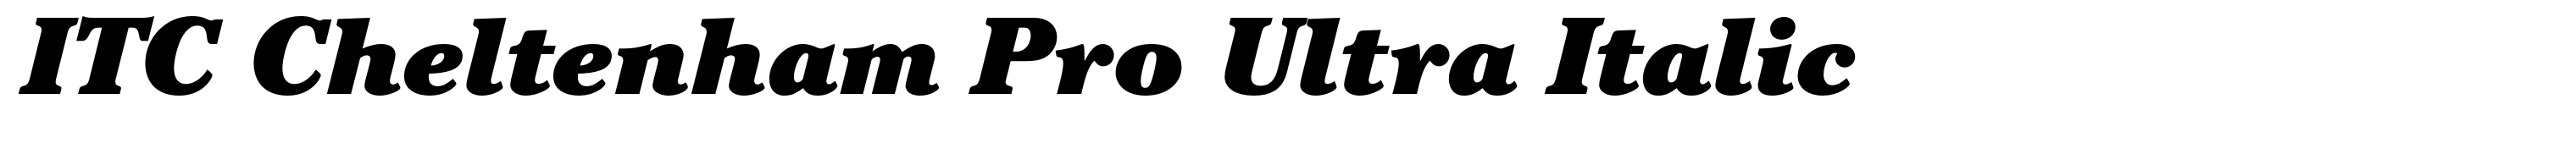 ITC Cheltenham Pro Ultra Italic